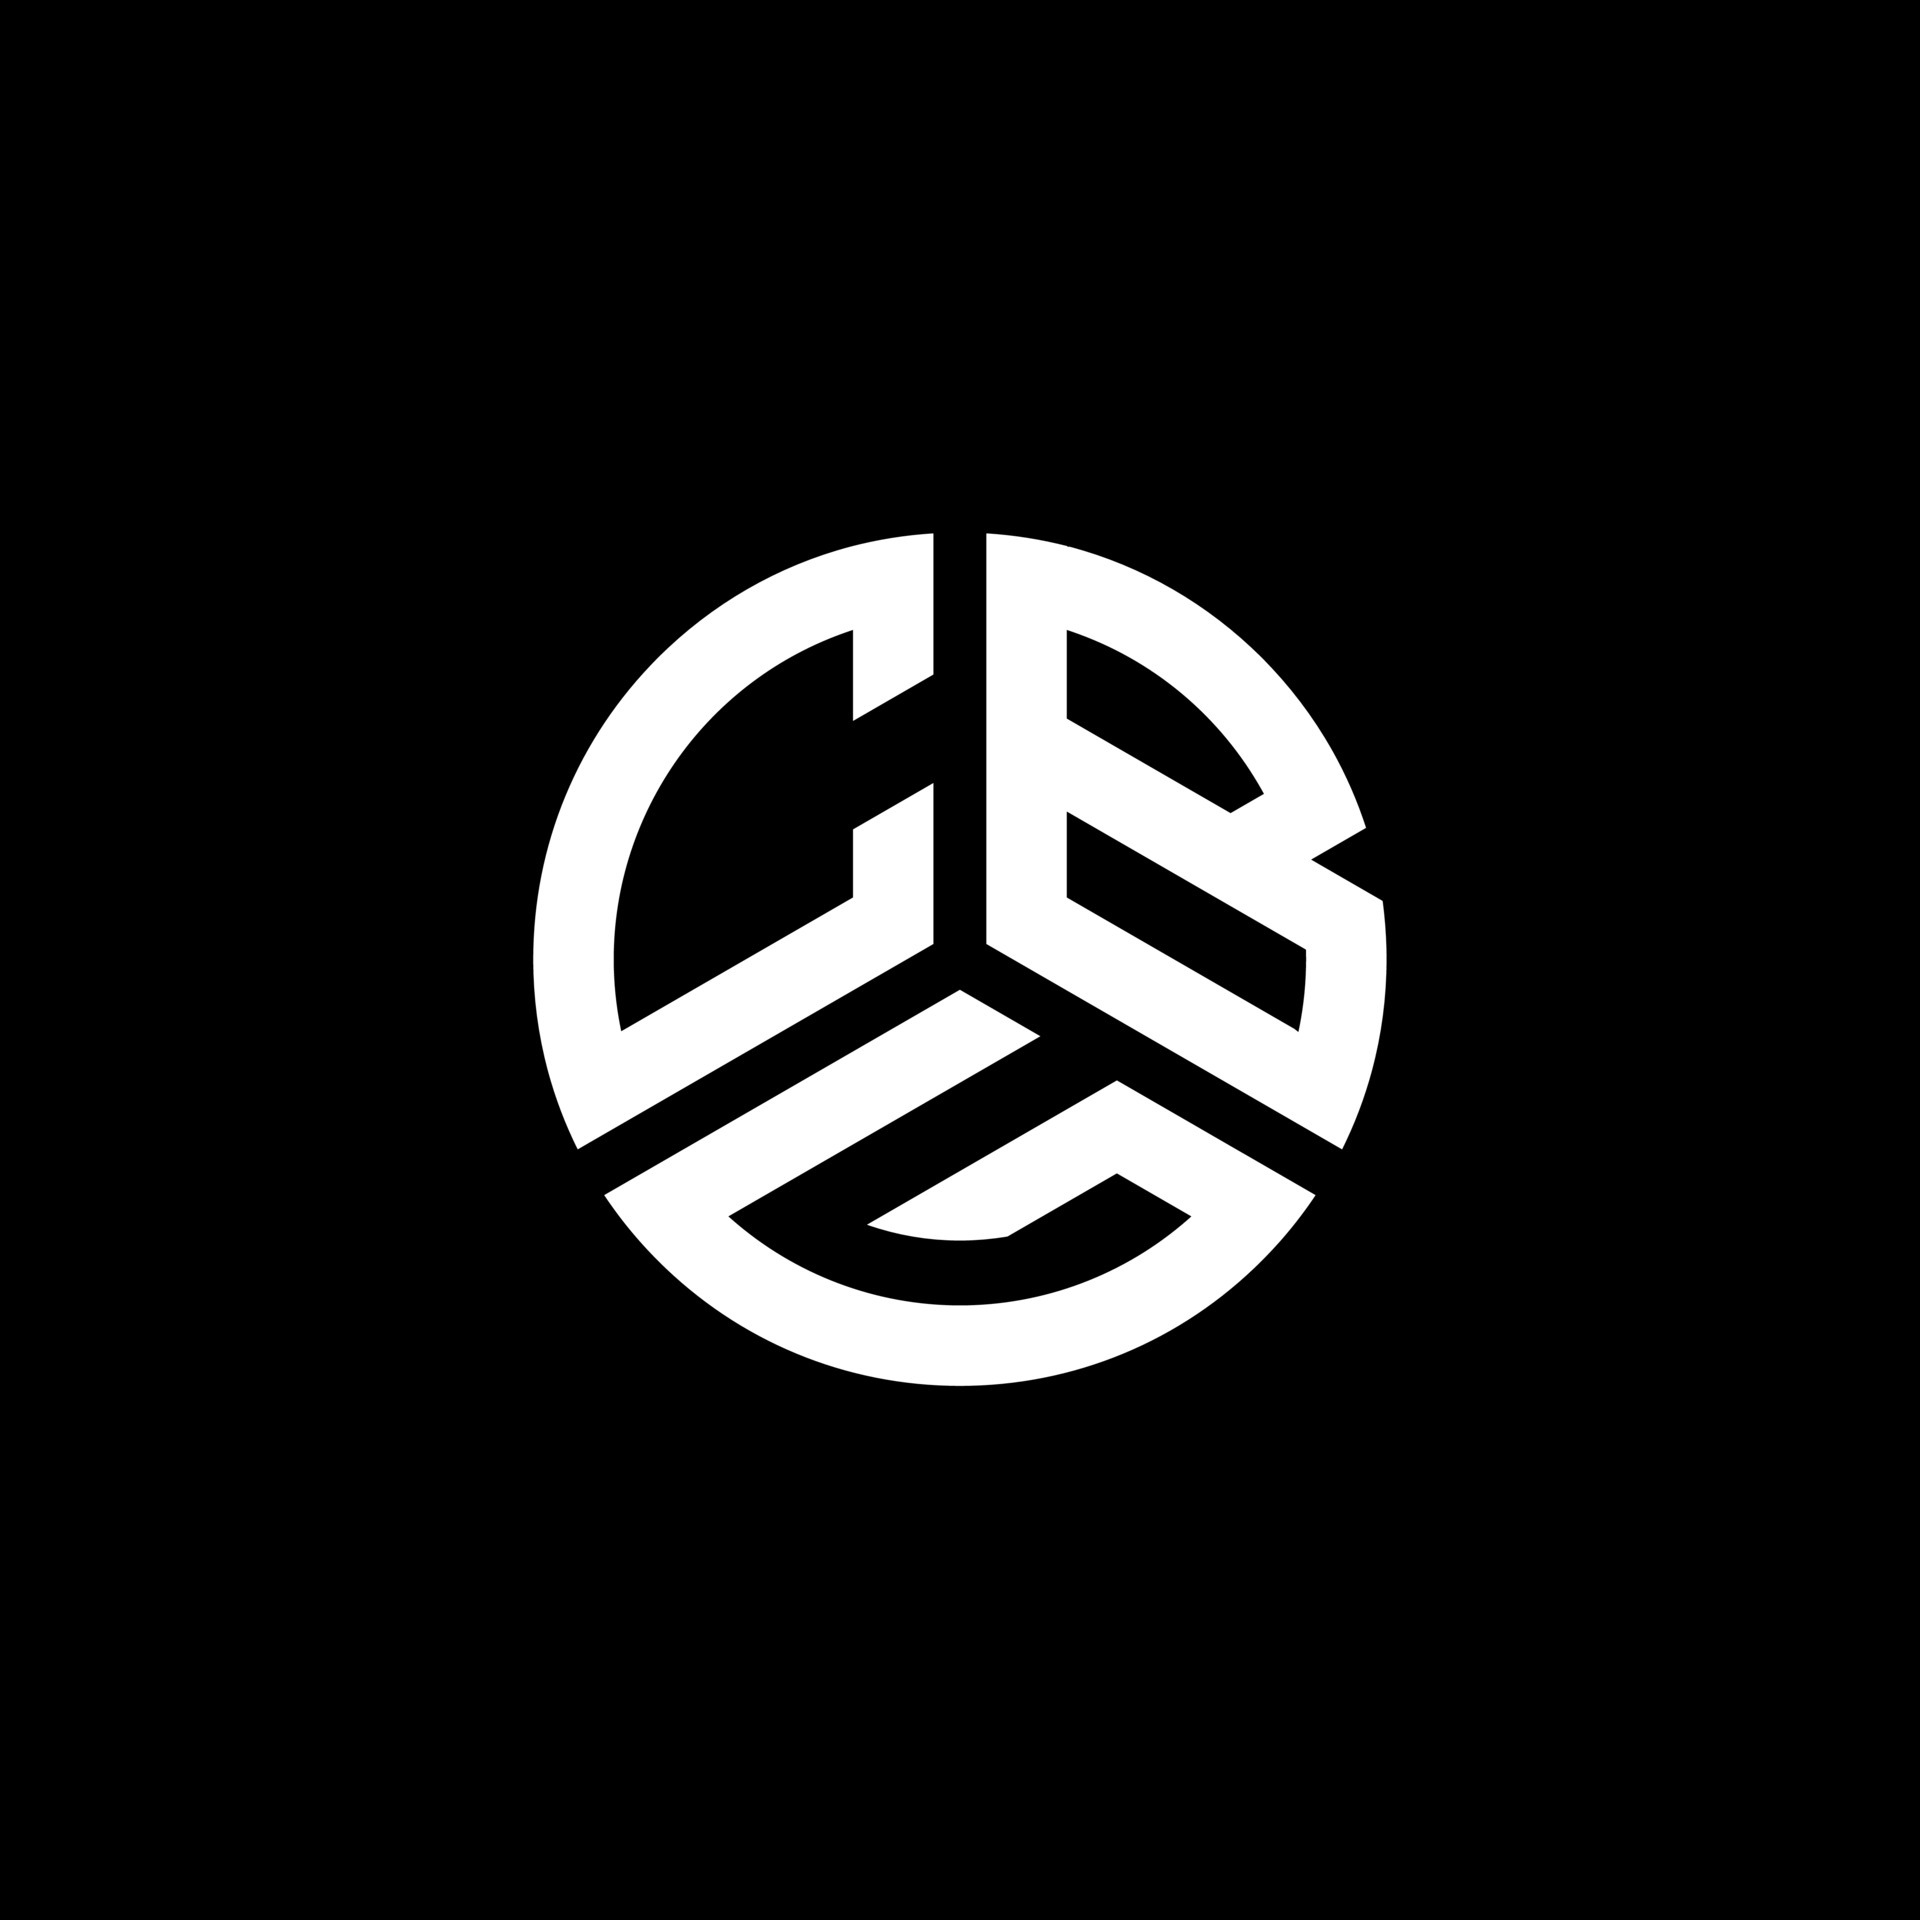 Cbg Letter Logo Design On White Background Cbg Creative Initials